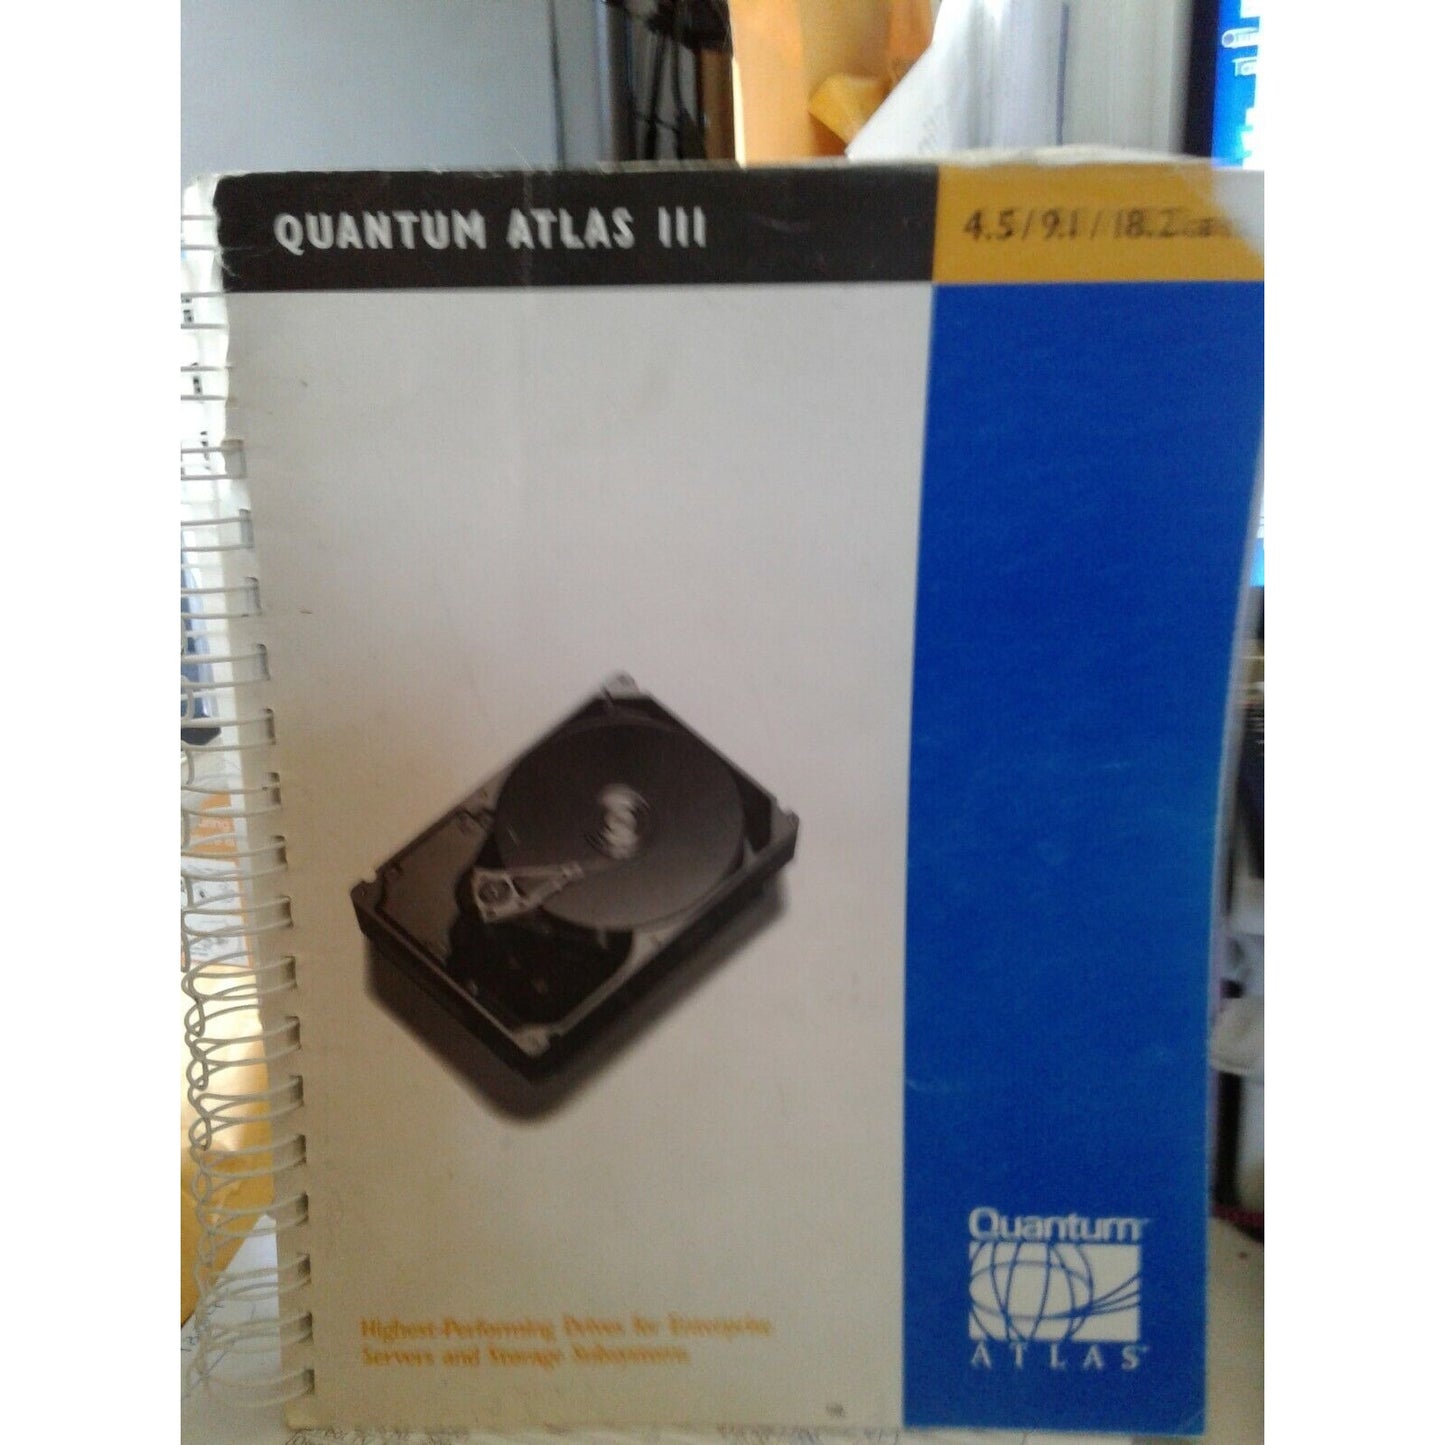 Manual Quantum Atlas III 4.5 / 9.1 / 18.2 GB SCSI Highest Performing Drives